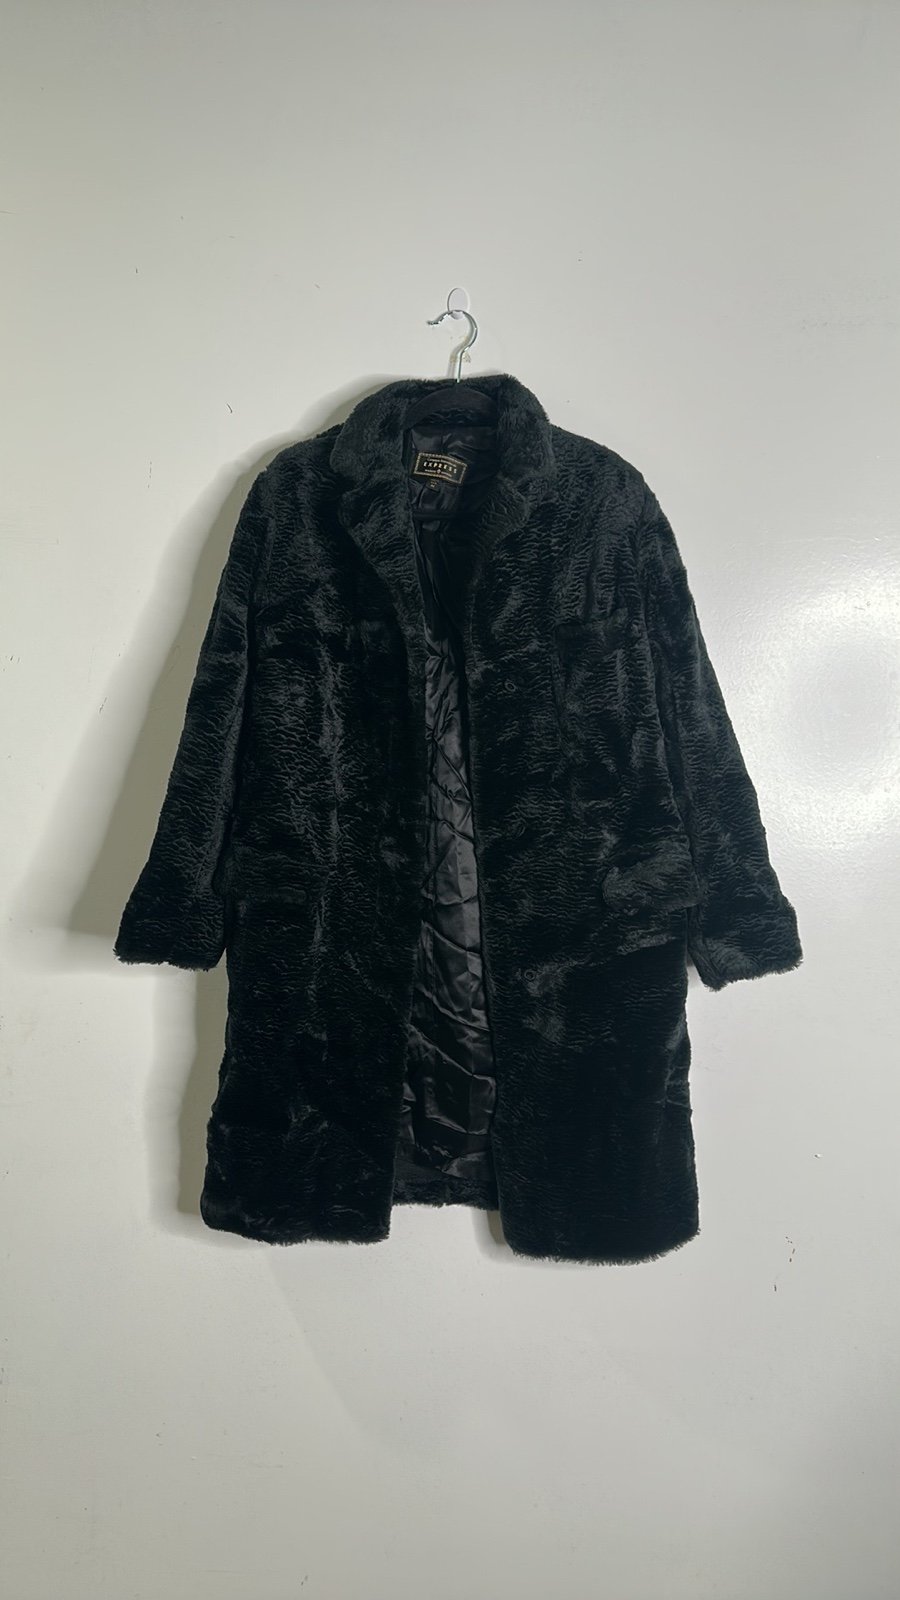 Express faux fur black coat size medium 0xTu8nba3